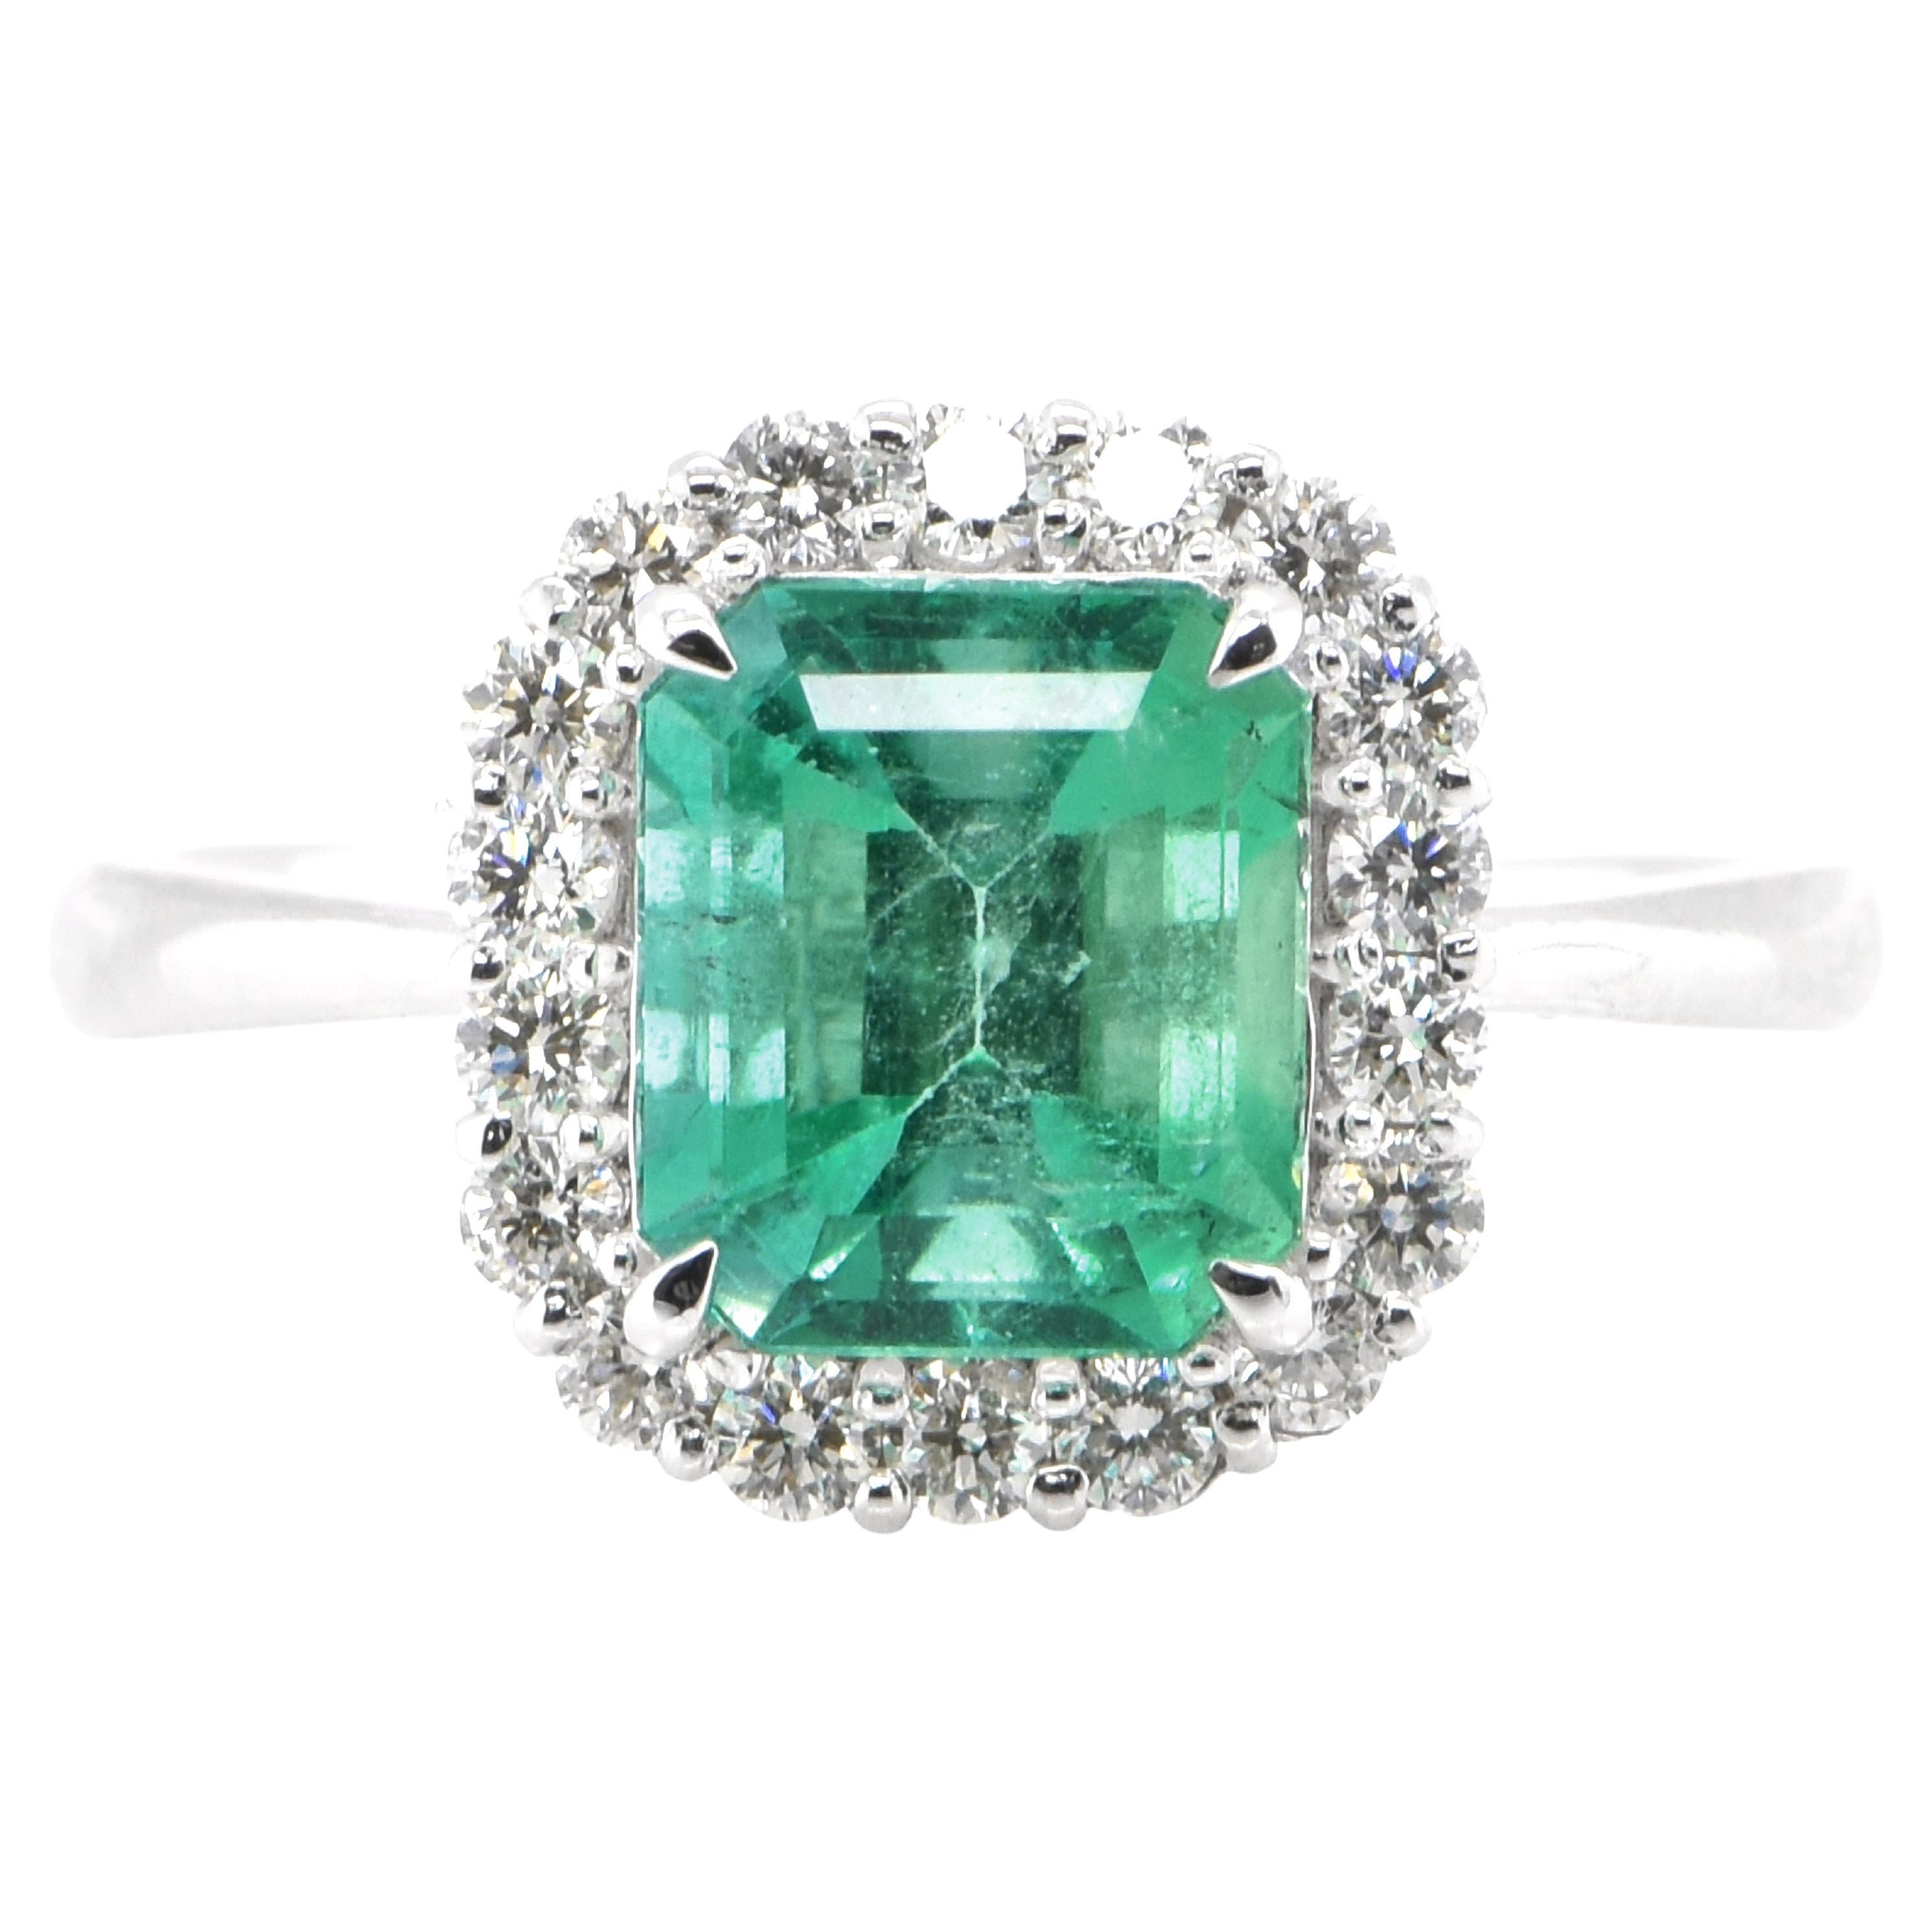 1.93 Carat Natural Emerald and Diamond Halo Cocktail Ring Set in Platinum